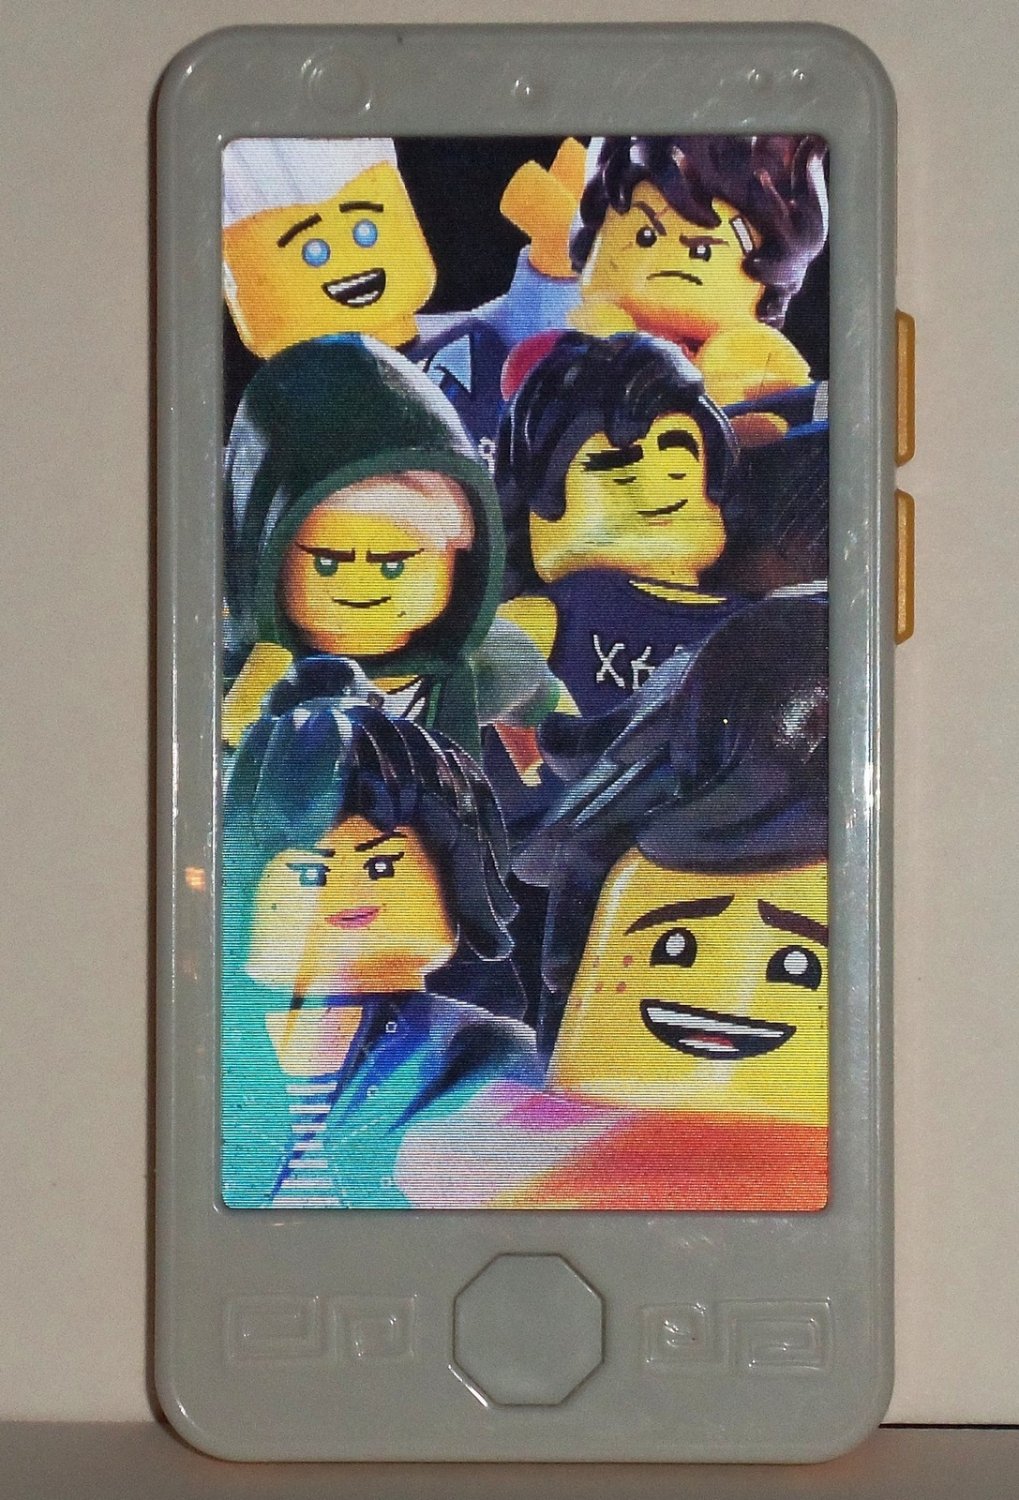 2017 Mcdonalds Happy Meal Toy Lego Ninjago MOVIE #4 SelfIe Phone New Sealed